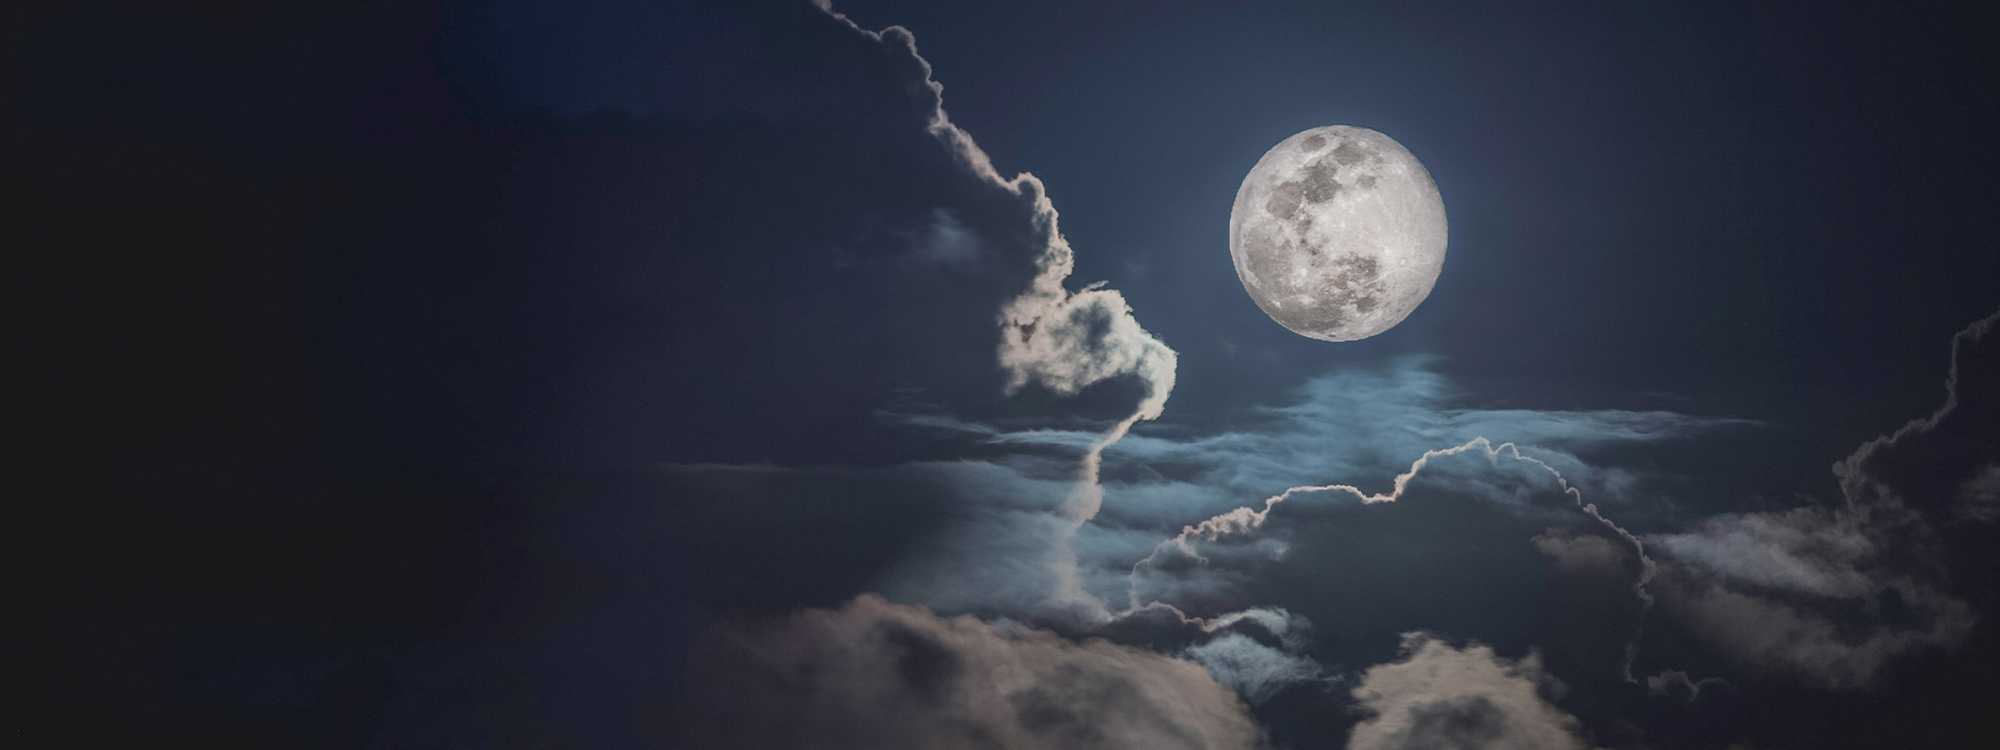 Moonlight shining through clouds at night